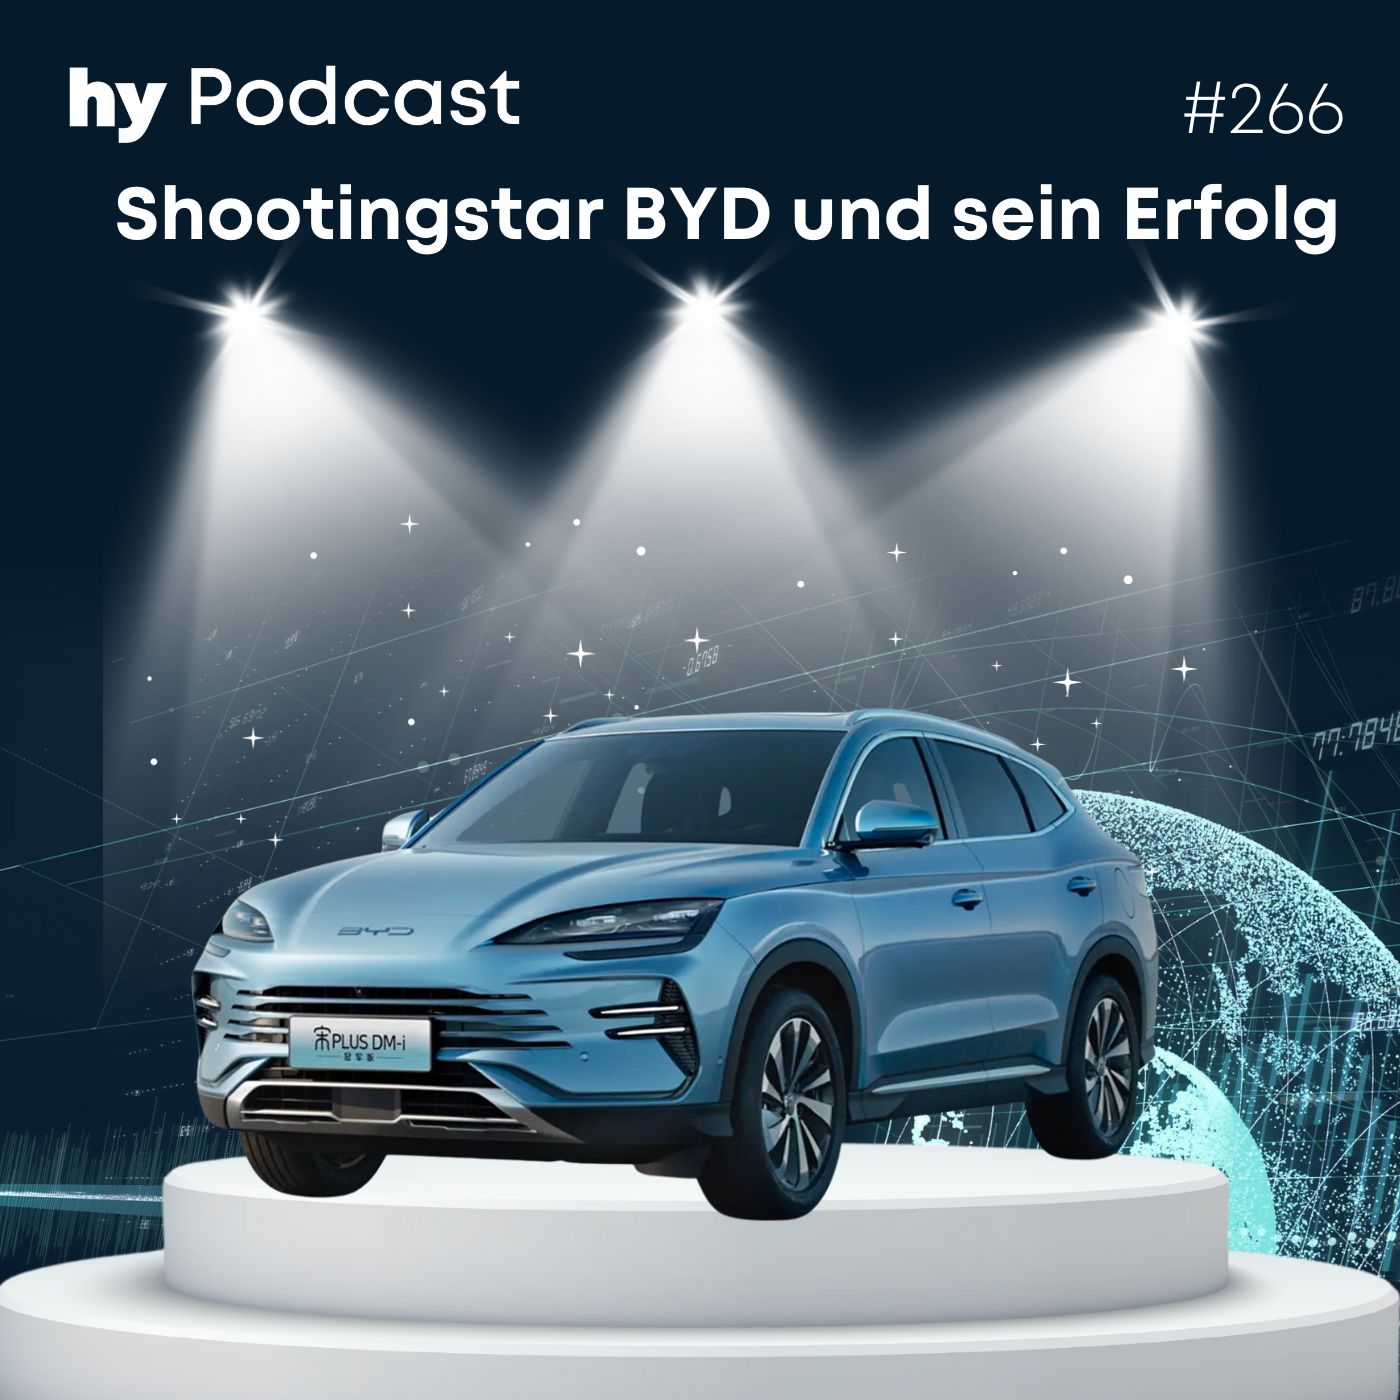 Folge 266: Shootingstar BYD und sein Angriff auf Europas Autoindustrie